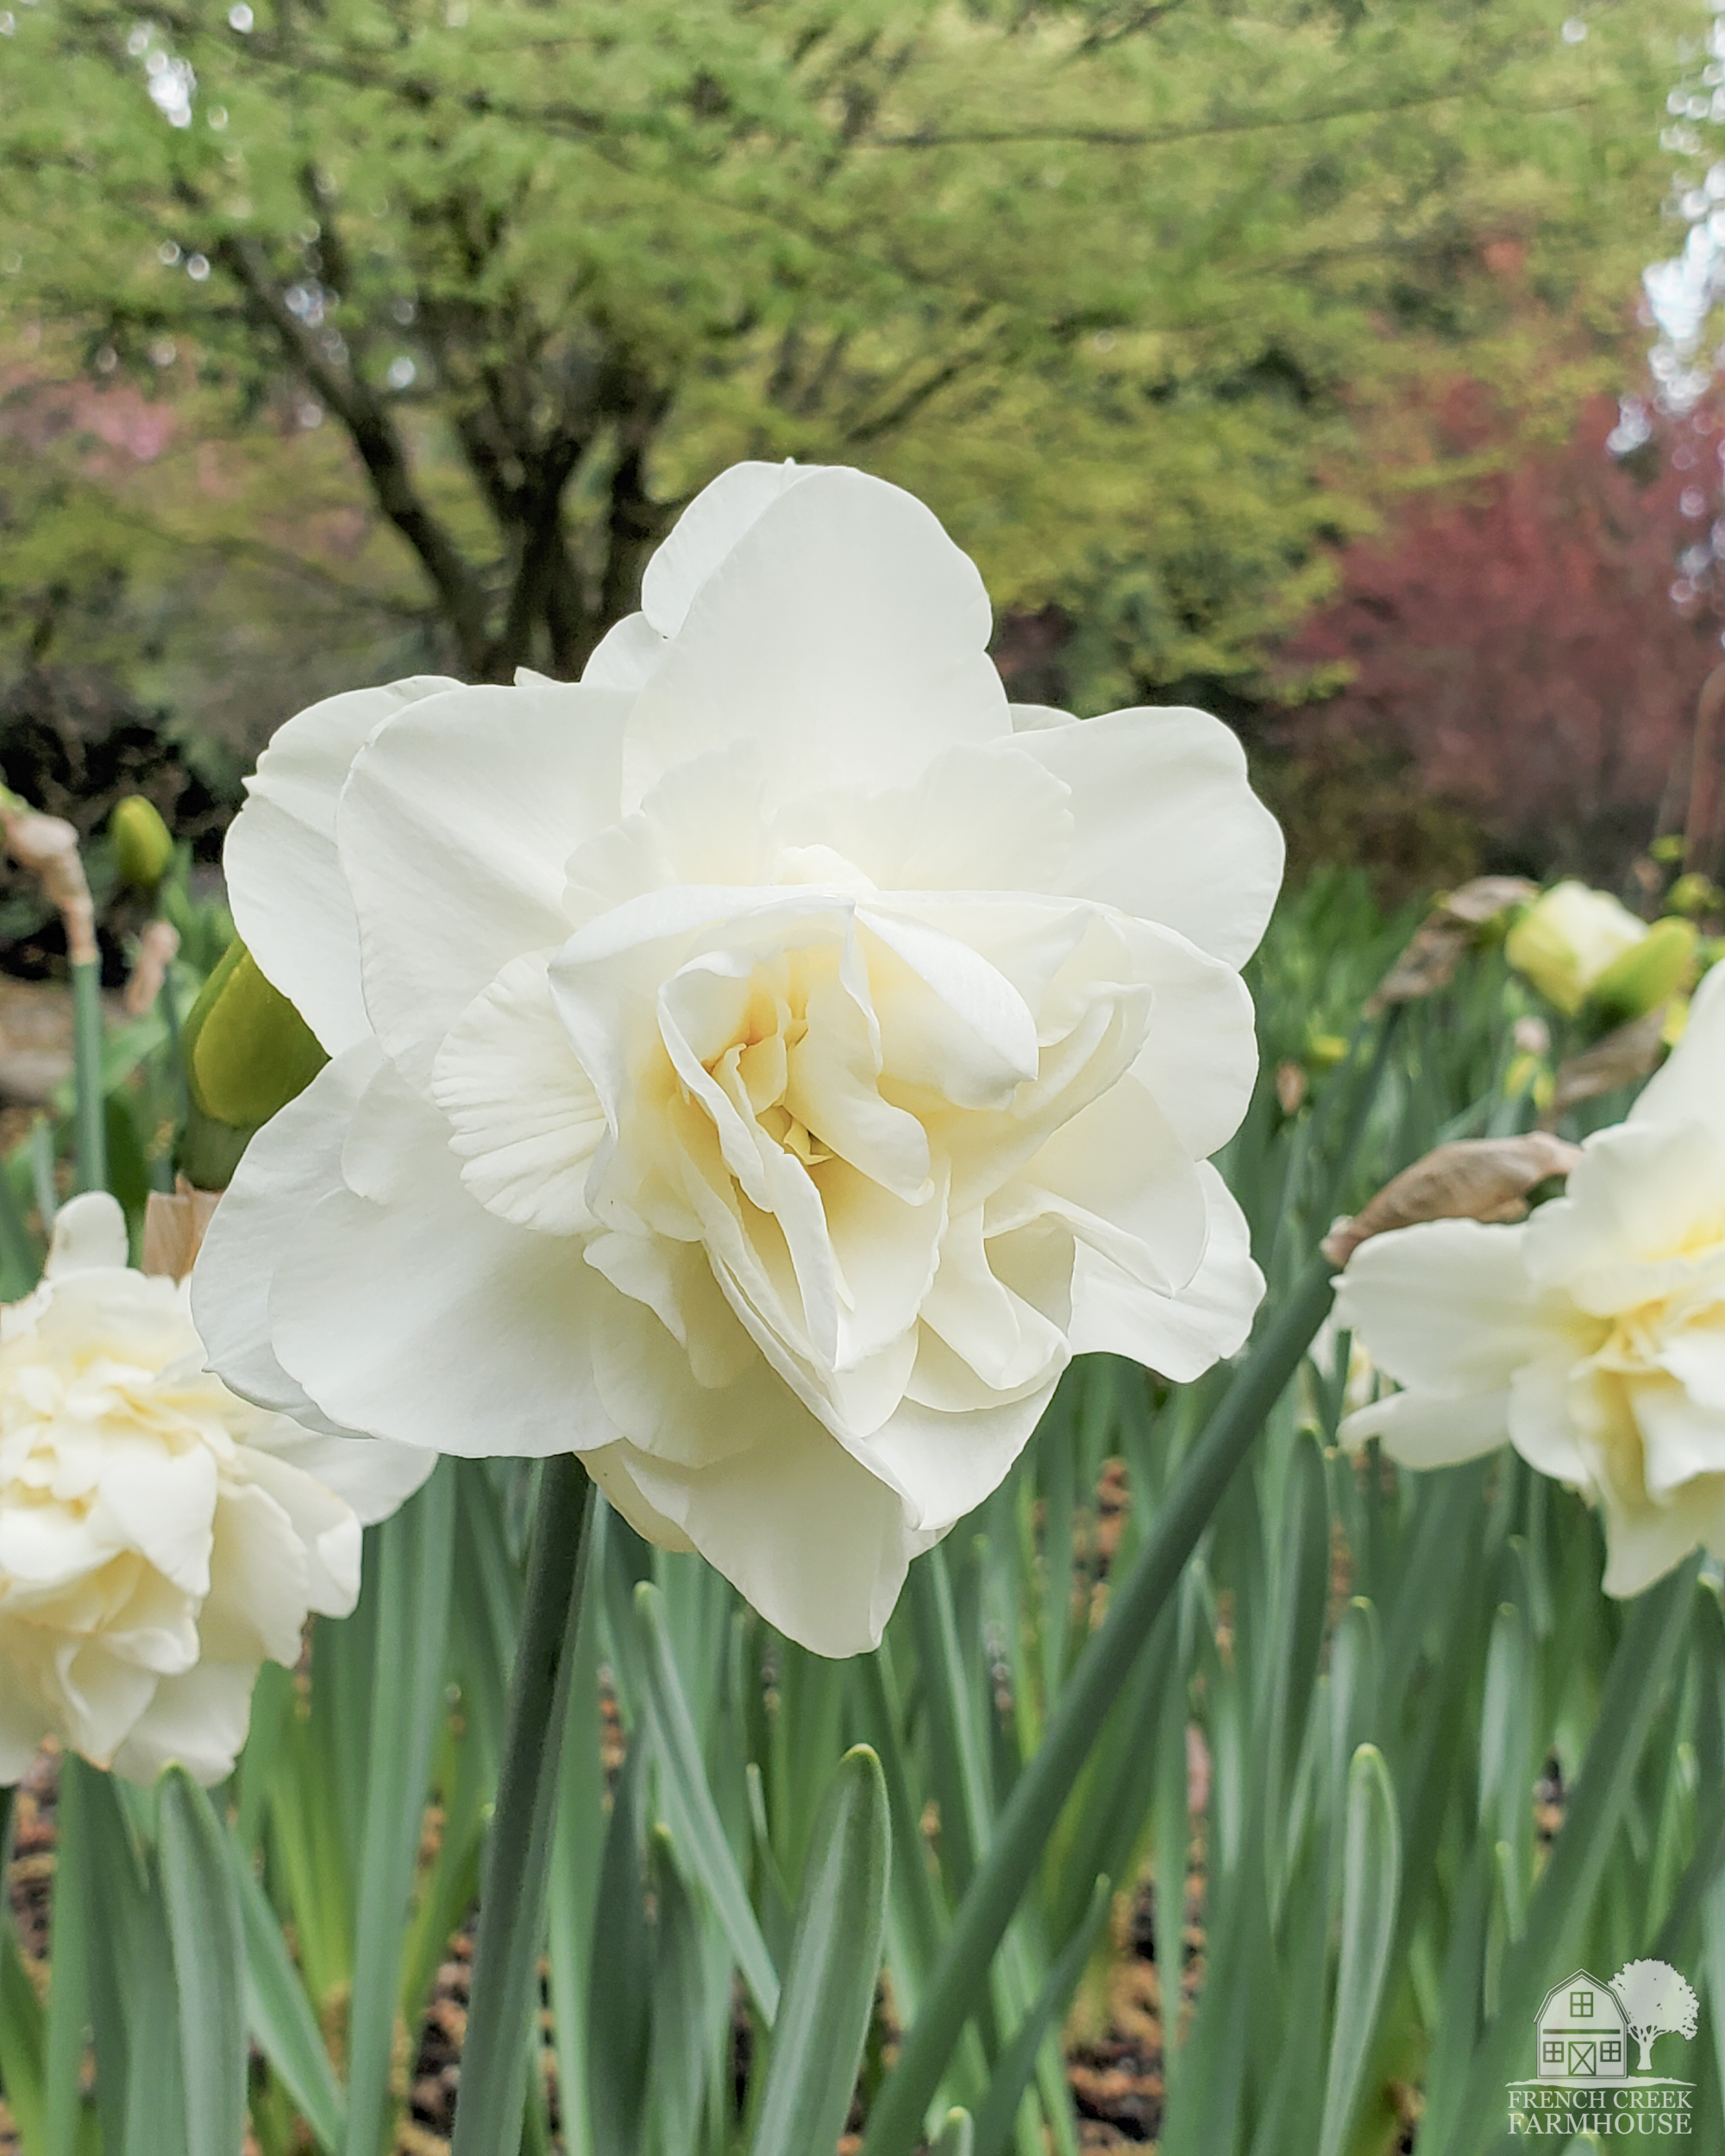 Obdam Double-Flowering Daffodils